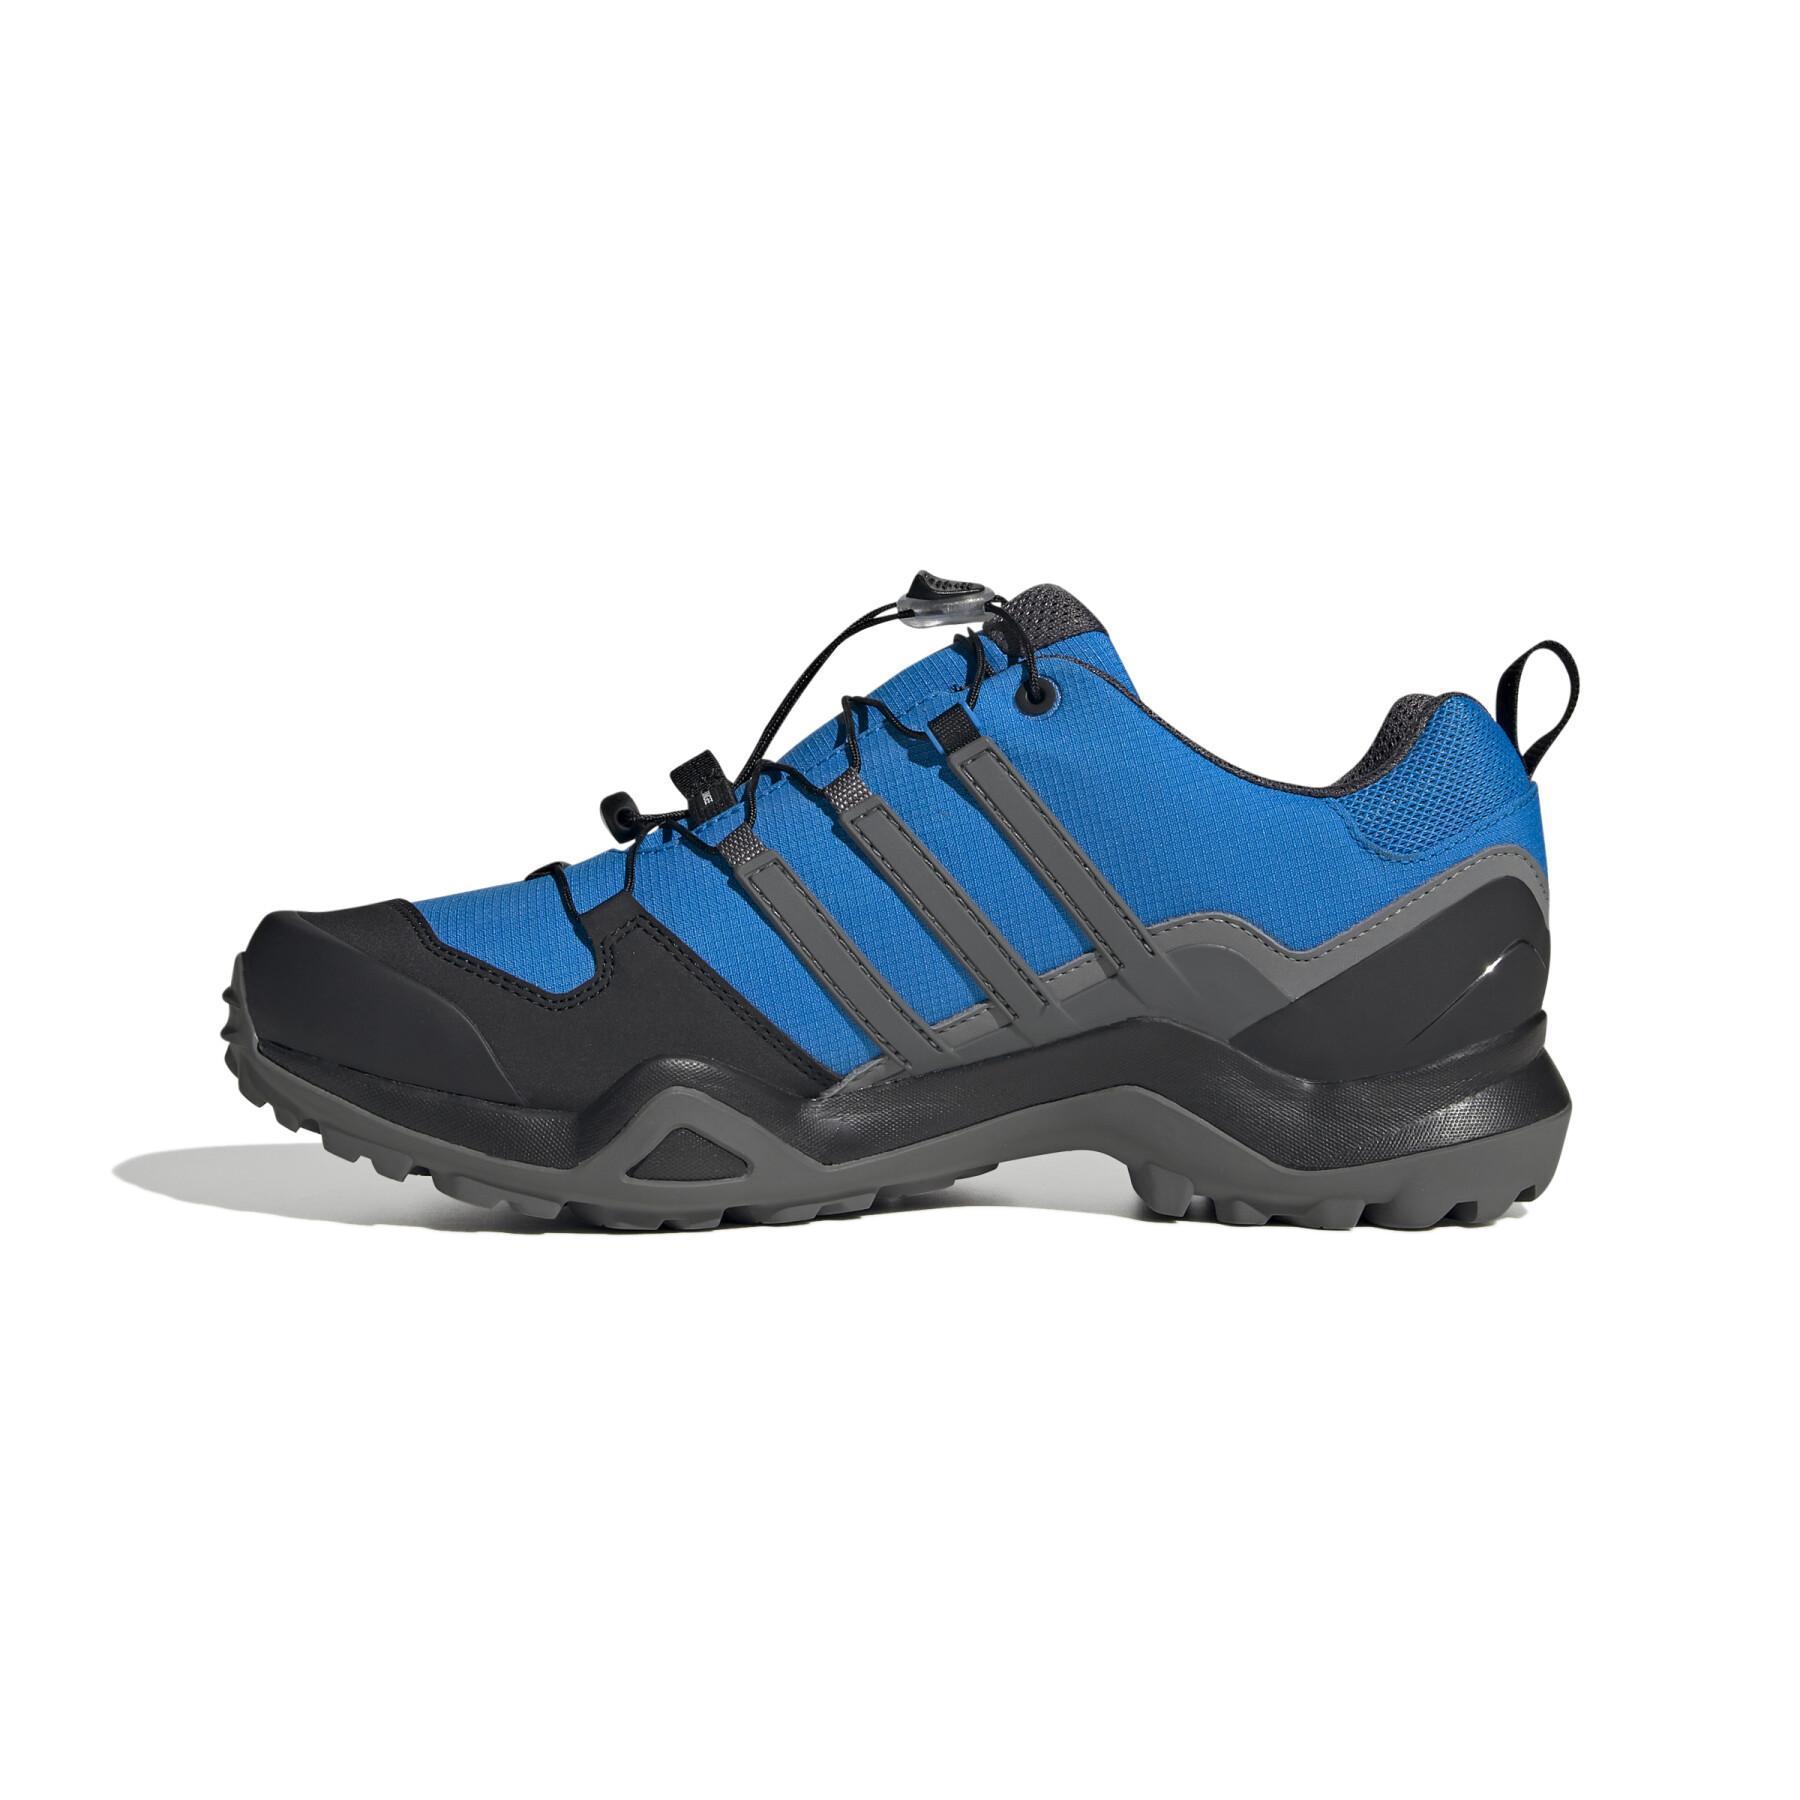 Chaussures de randonnée adidas Terrex Swift R2 Gore-Tex